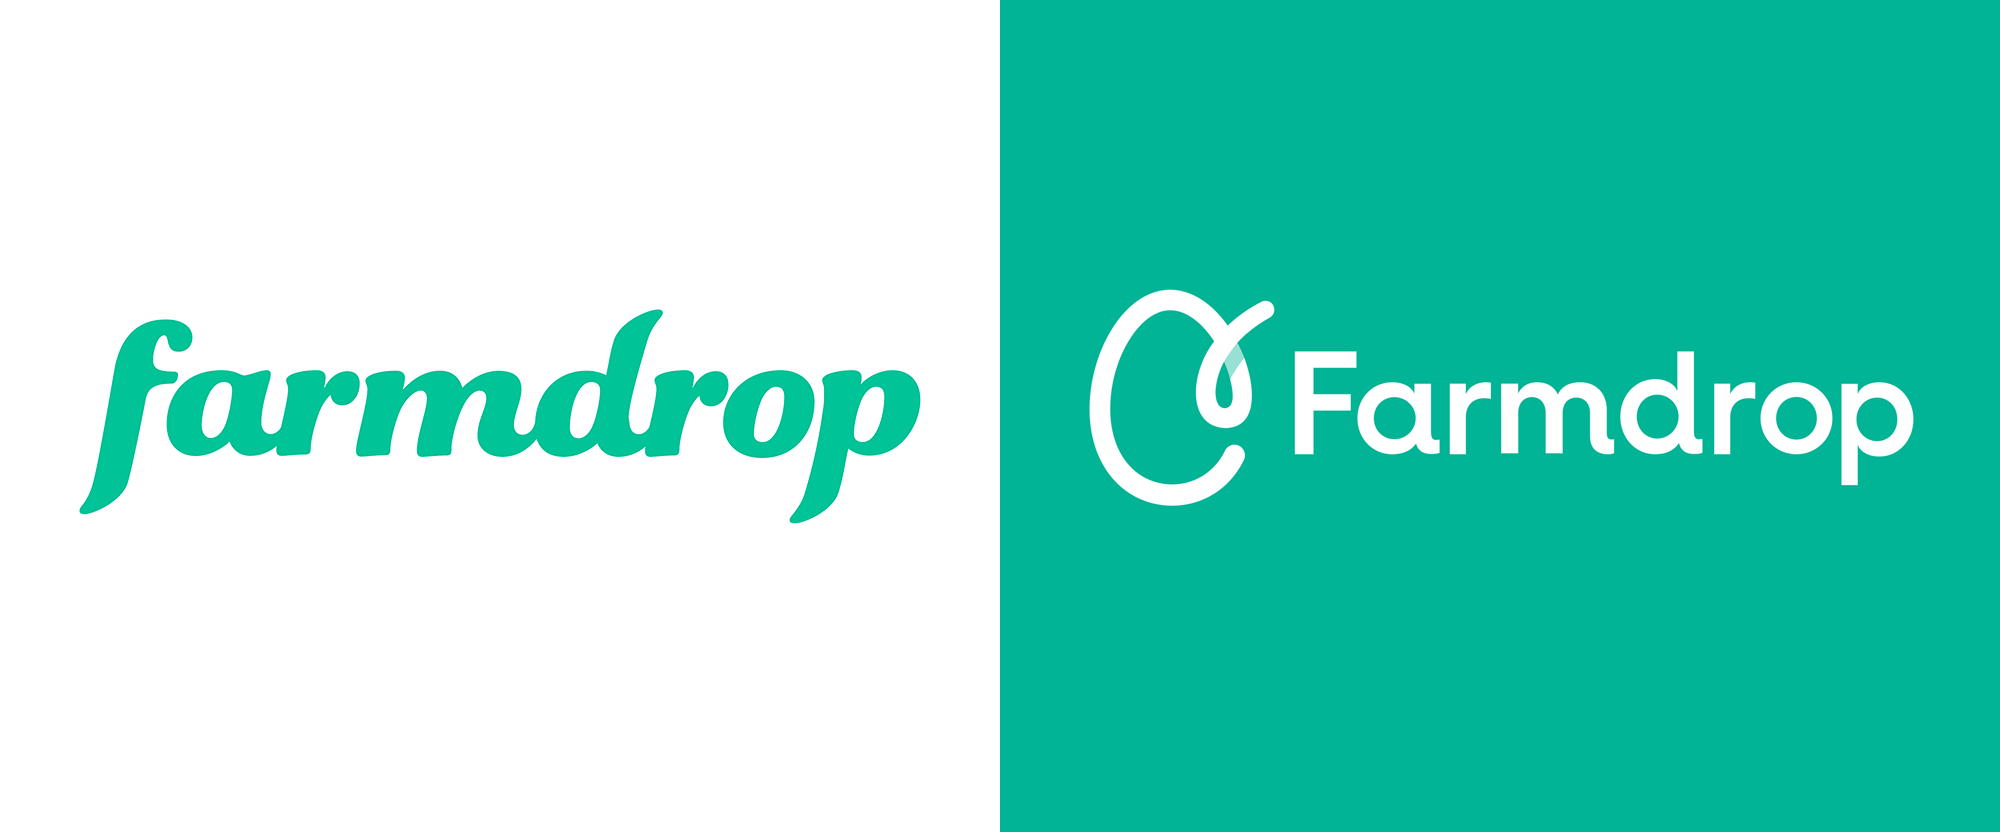 Drop Green Logo - Brand New: New Logo and Identity for Farmdrop